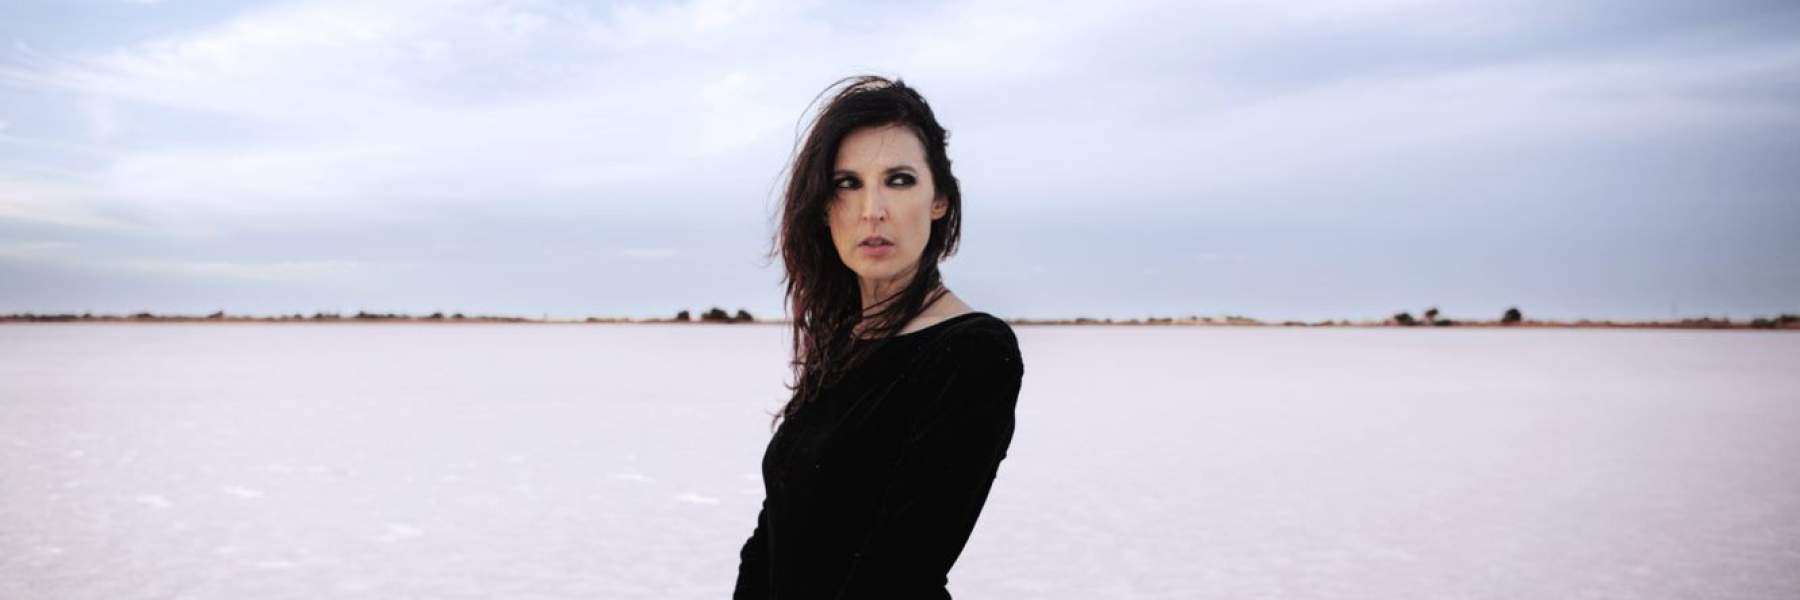 Adalita standing on a beach wearing black.